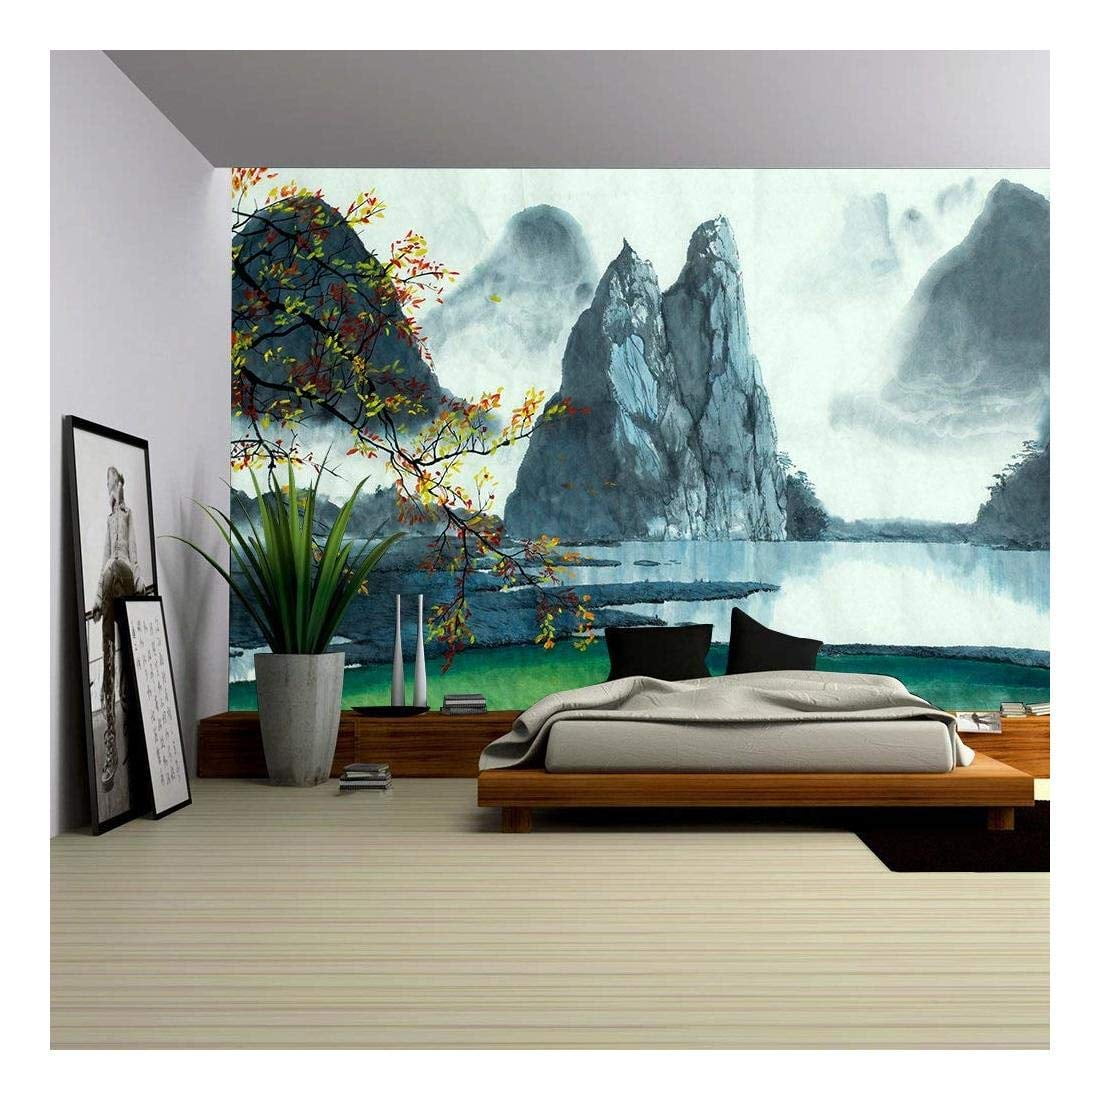 Photo wallpaper Wall mural Removable Self-adhesive Mountain lake 